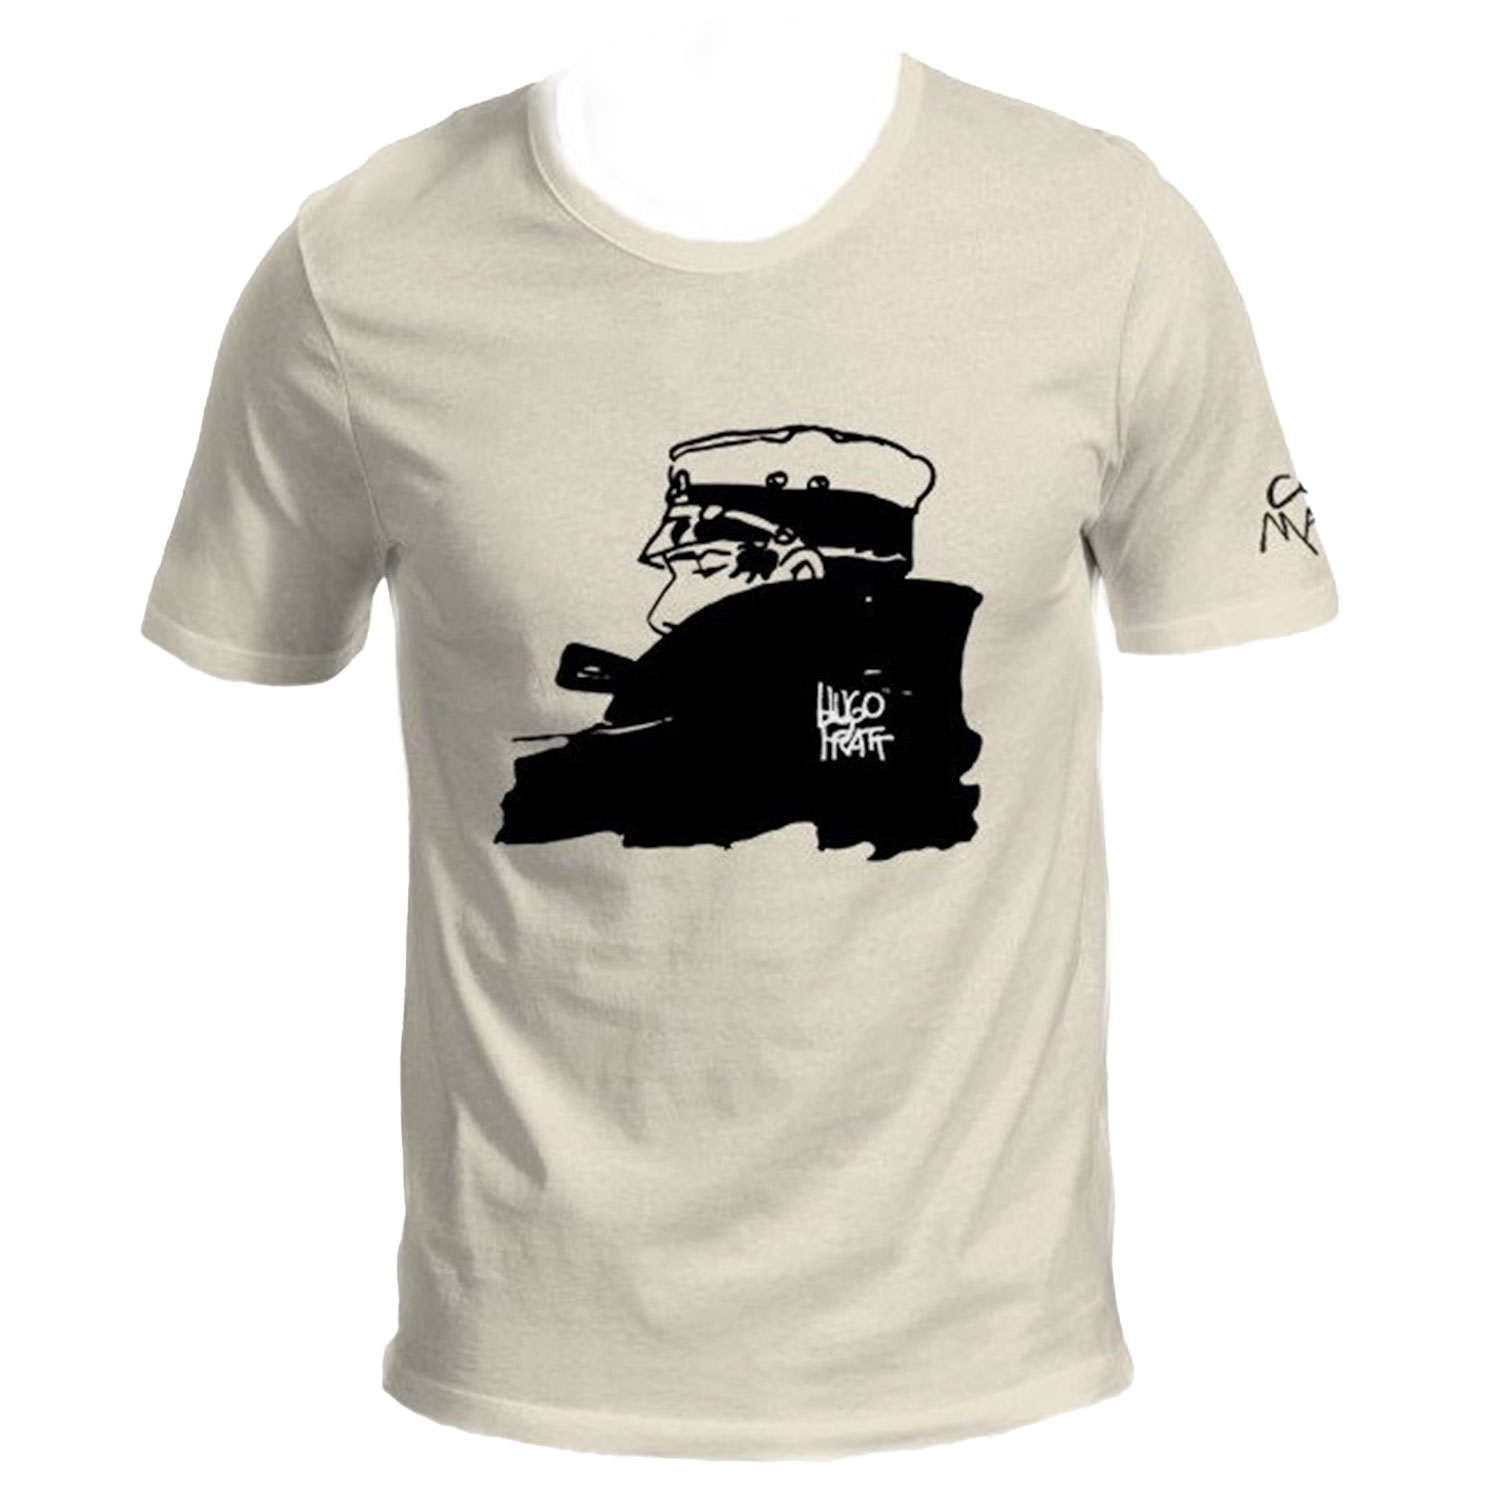 Hugo Pratt T-shirt : Corto Maltese , Nocturnal - Ecru - Size S